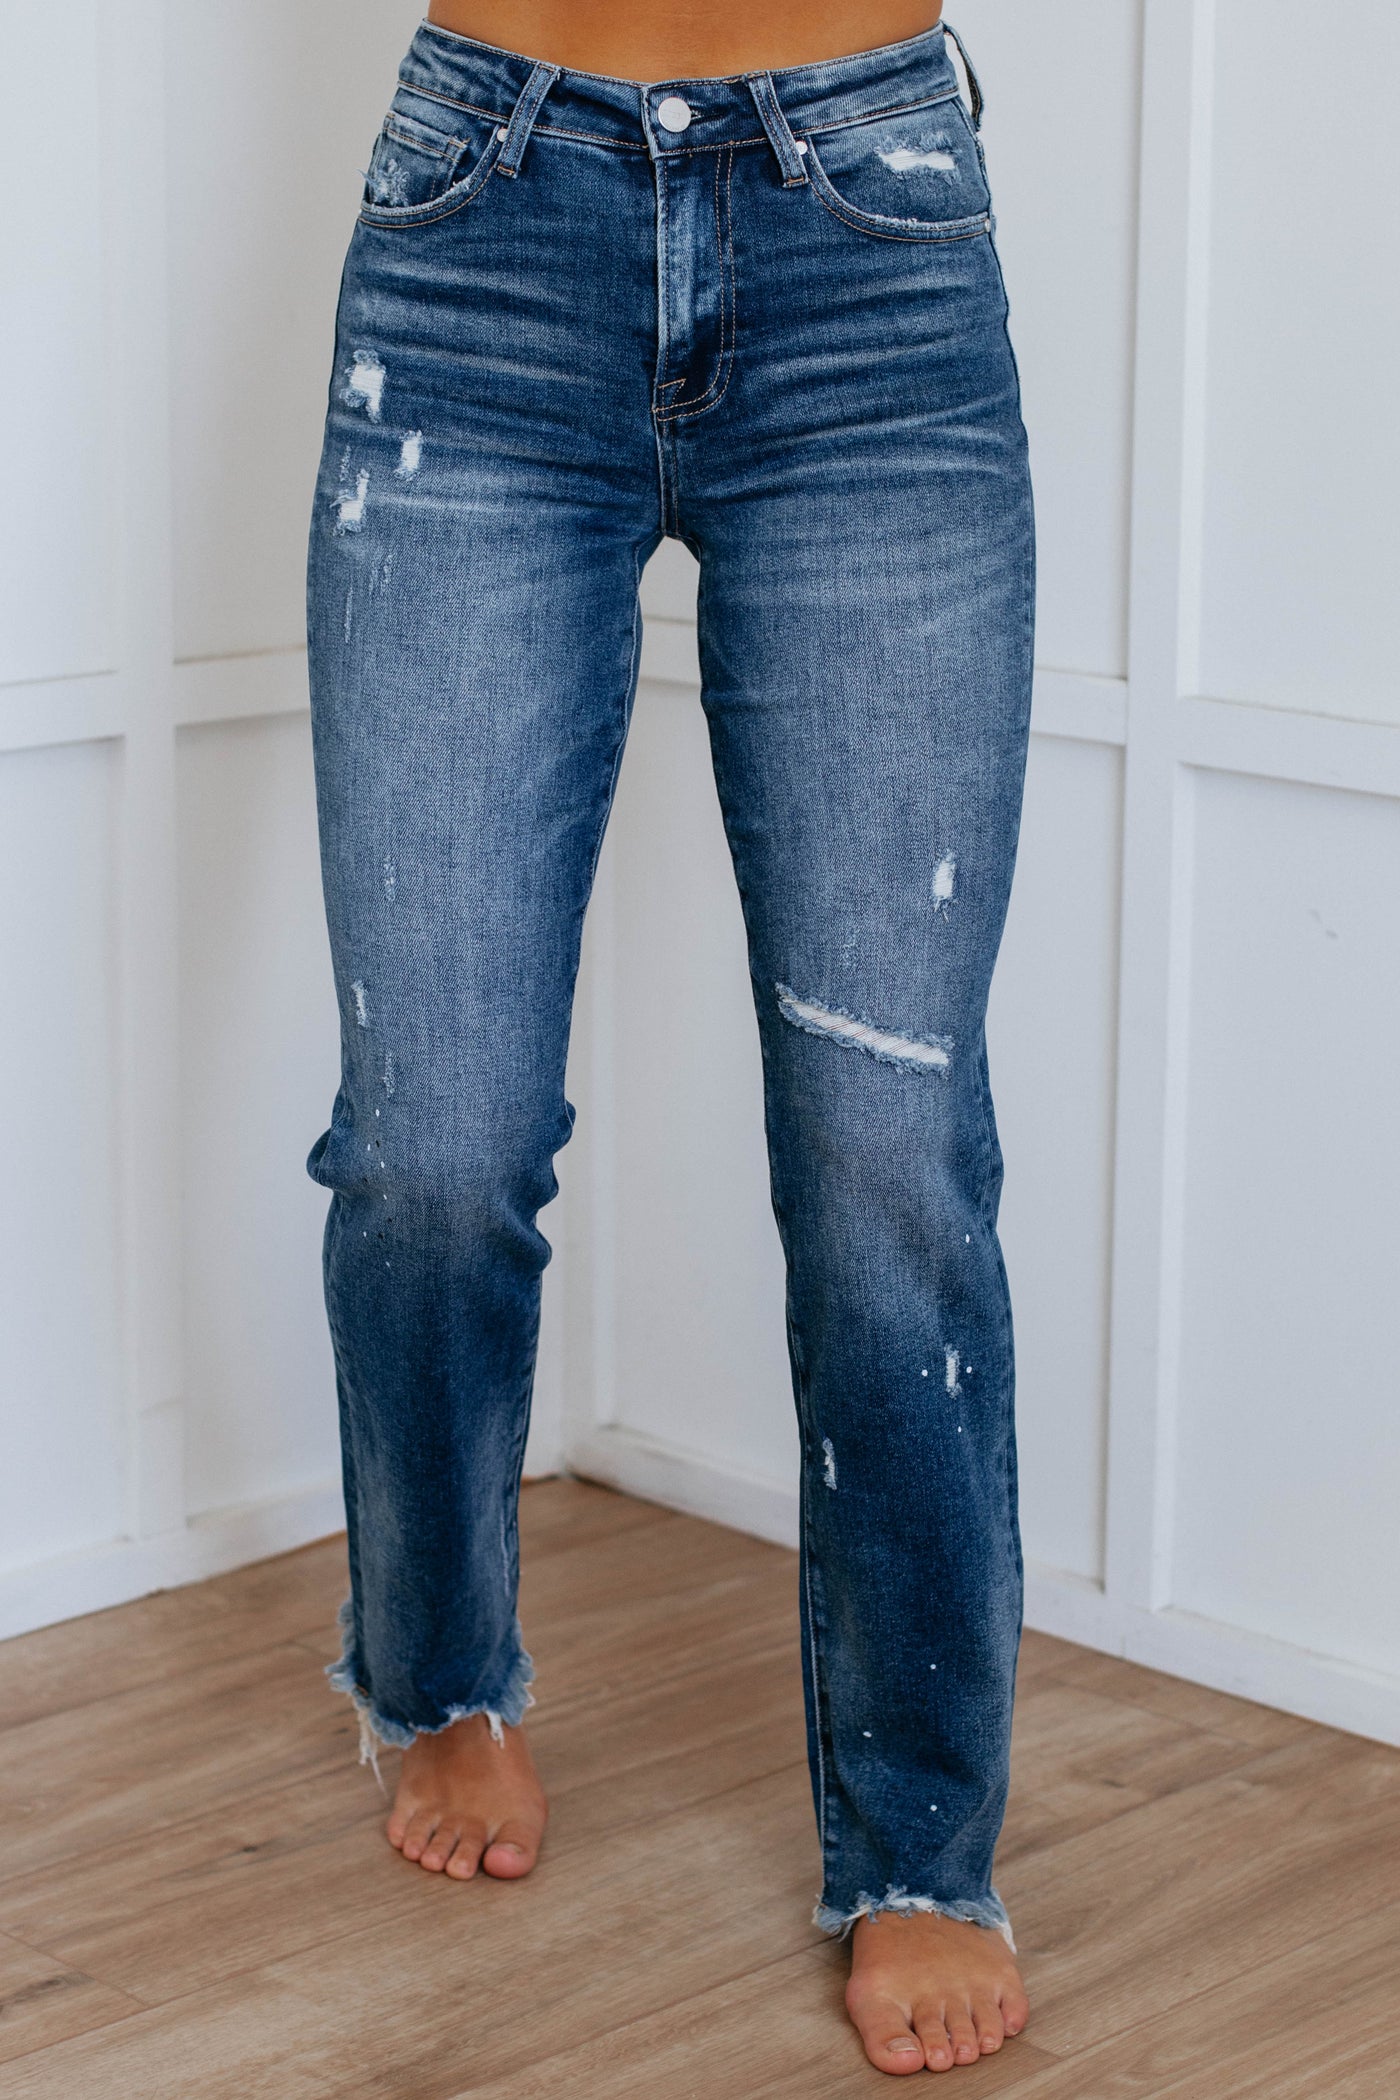 Ophelia Risen Jeans